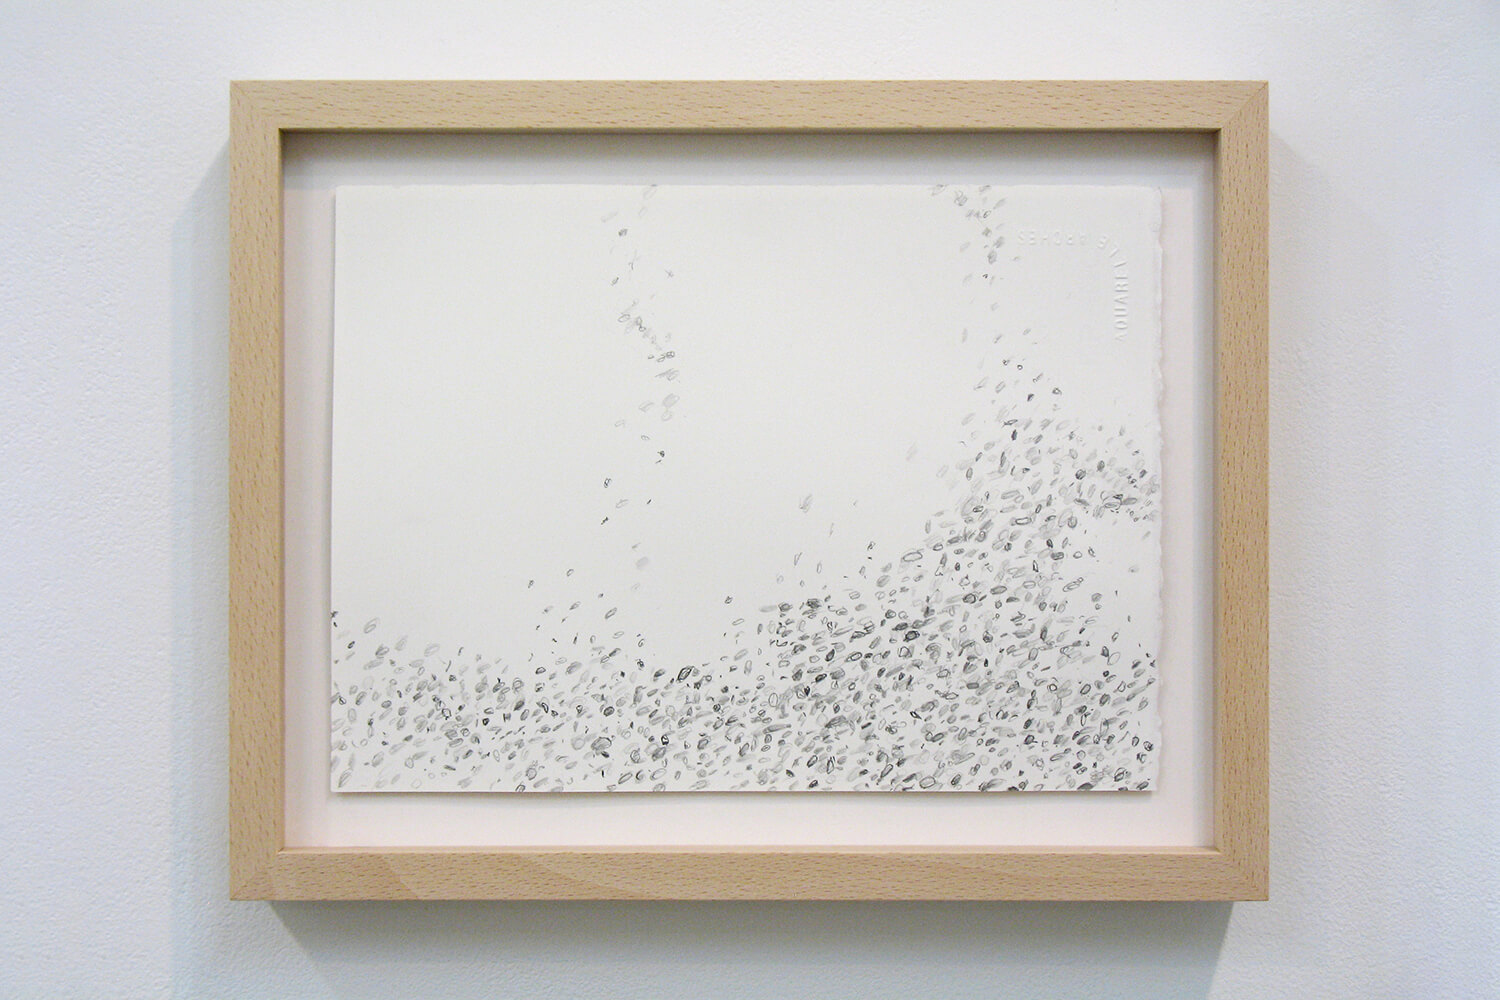 When the Dust Settles (d9)<br>Pencil on paper, 18.9 x 26 cm, 2010